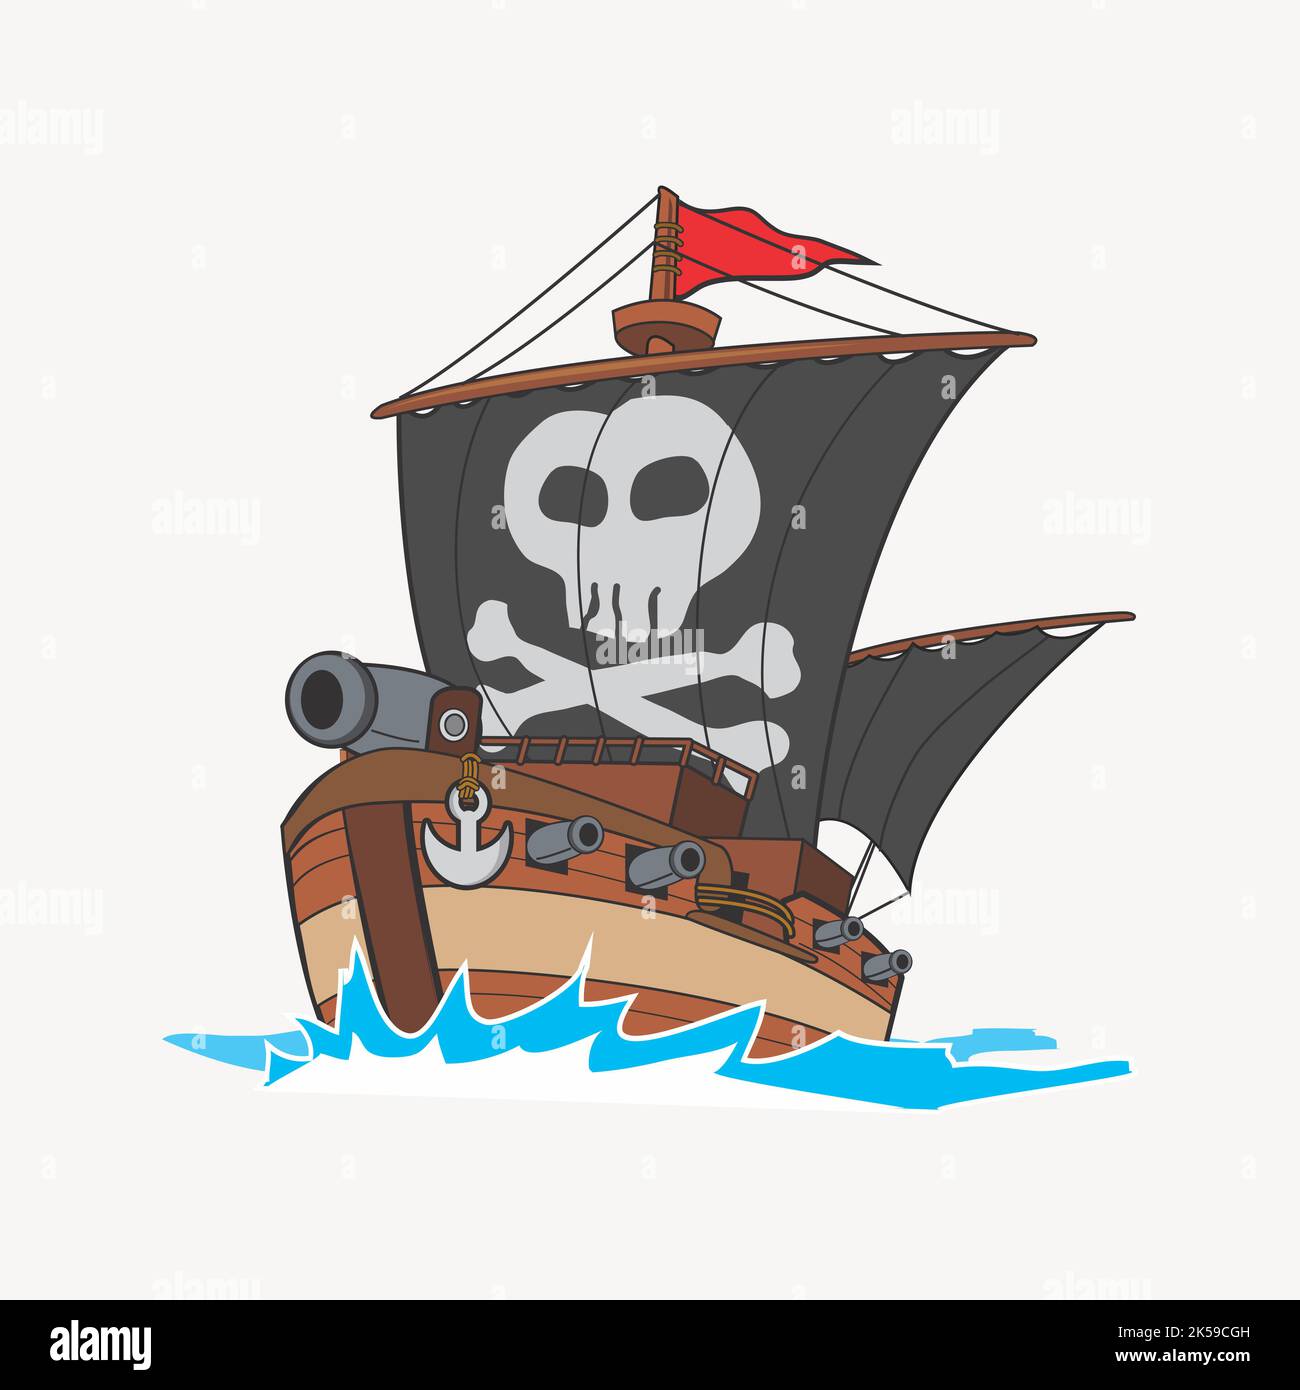 Клипарт пиратский корабль на прозрачном фоне